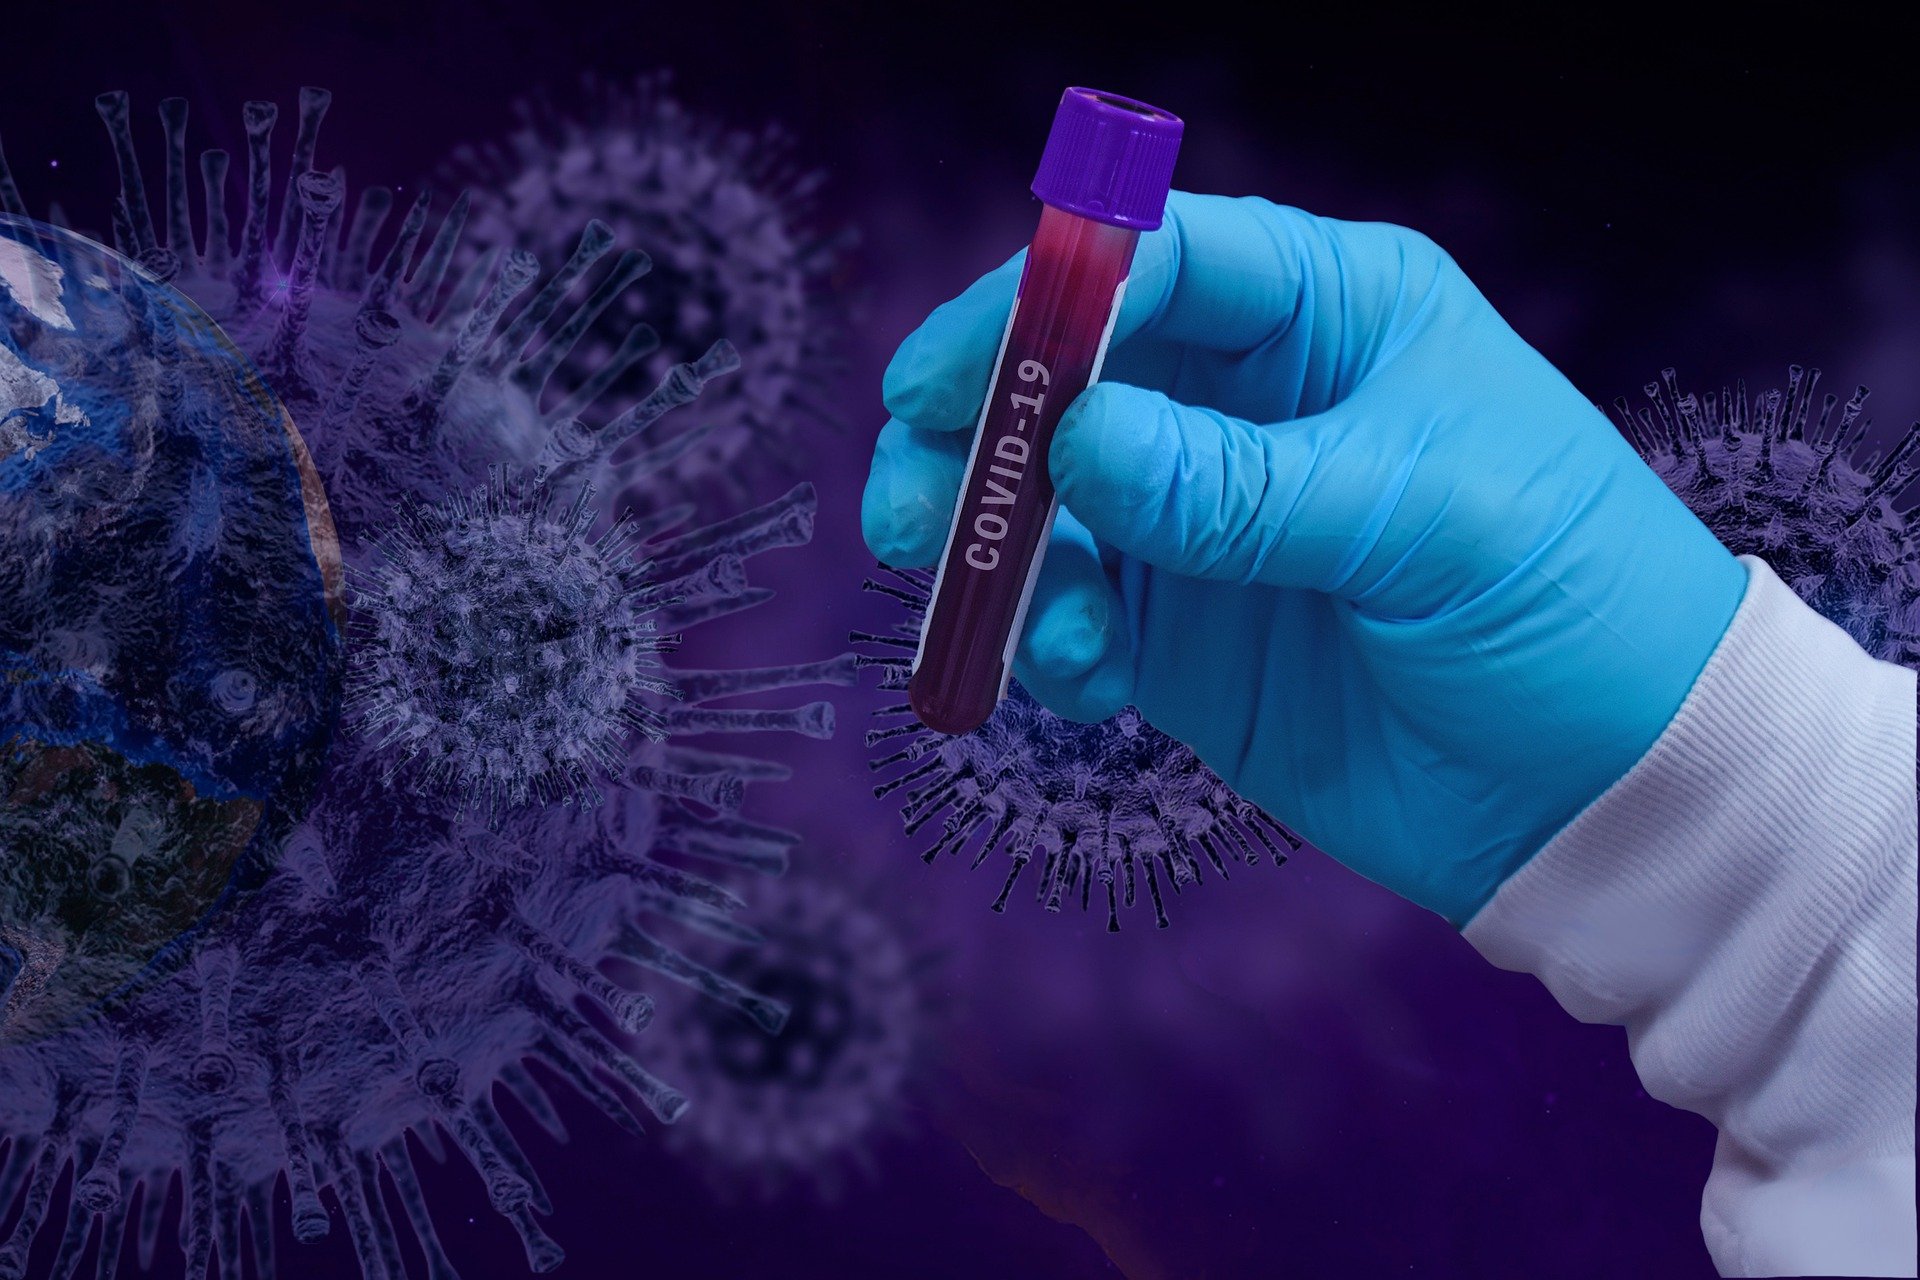 Illustration for the testing of blood for the novel coronavirus. | Source: Pixabay.